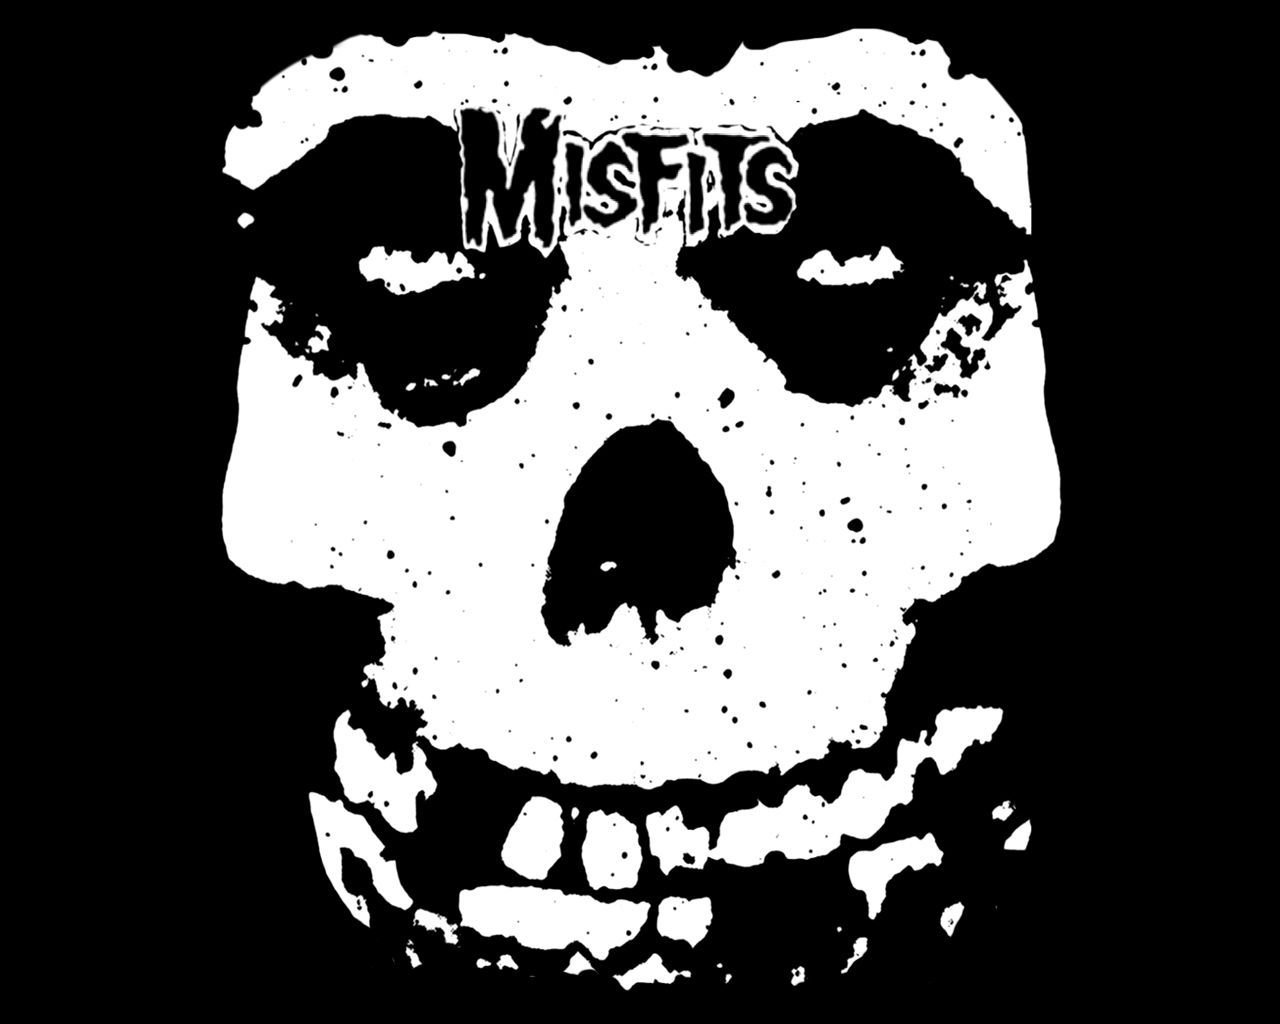 The Misfits by g0ldie on DeviantArt